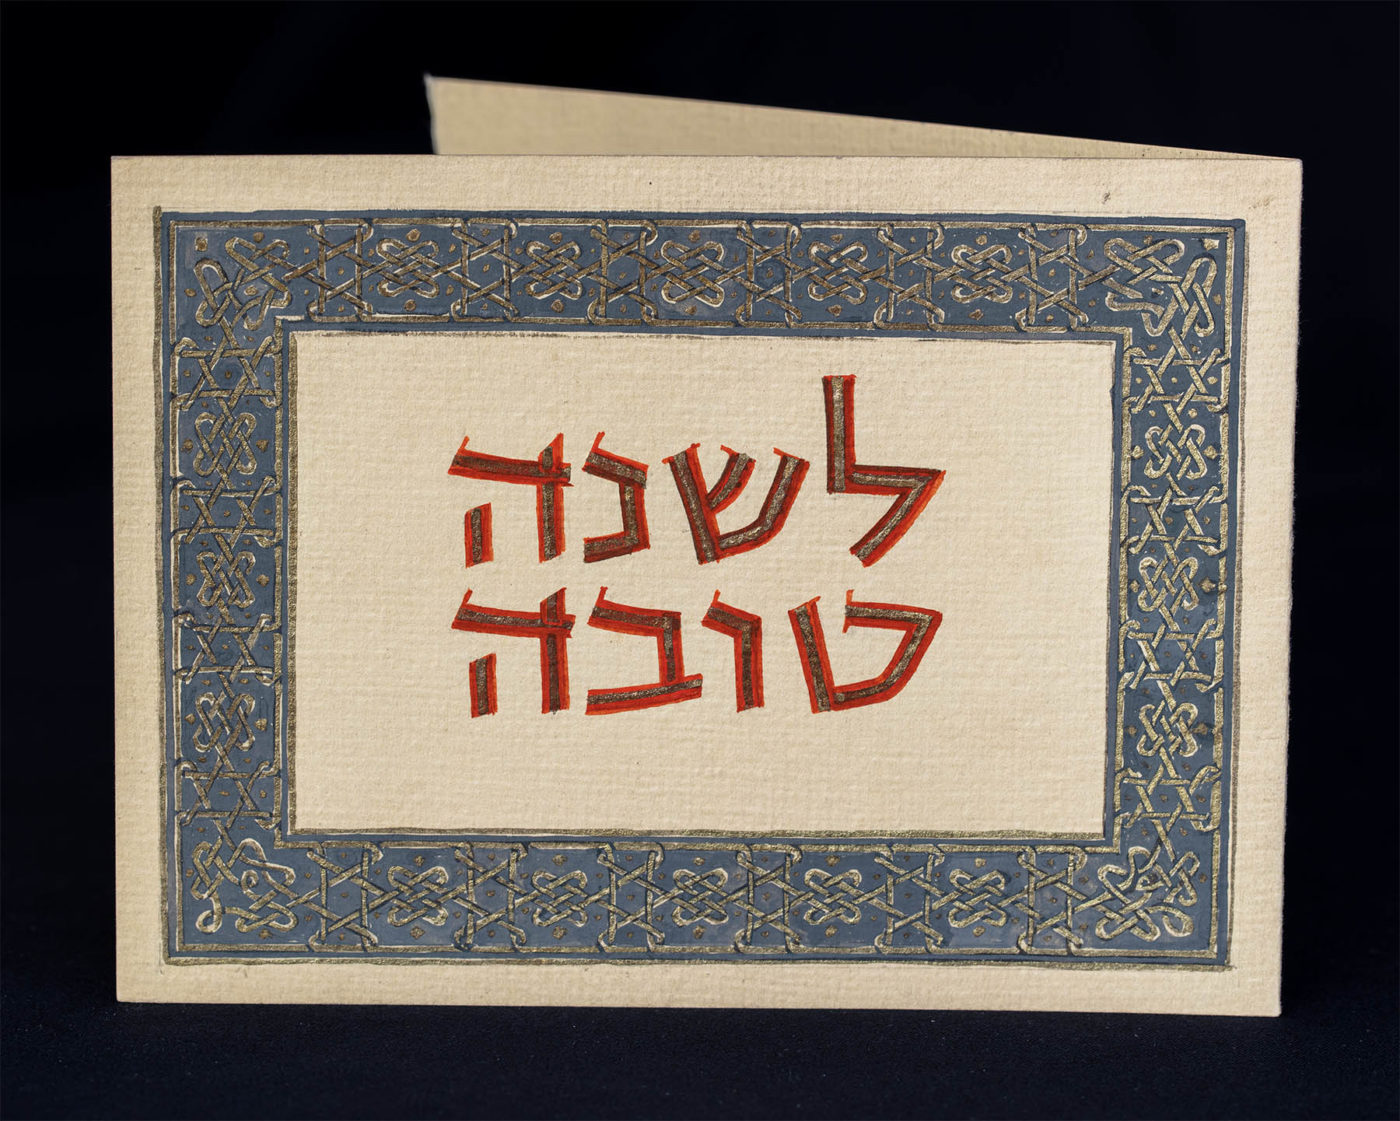 Jewish New Year’s card